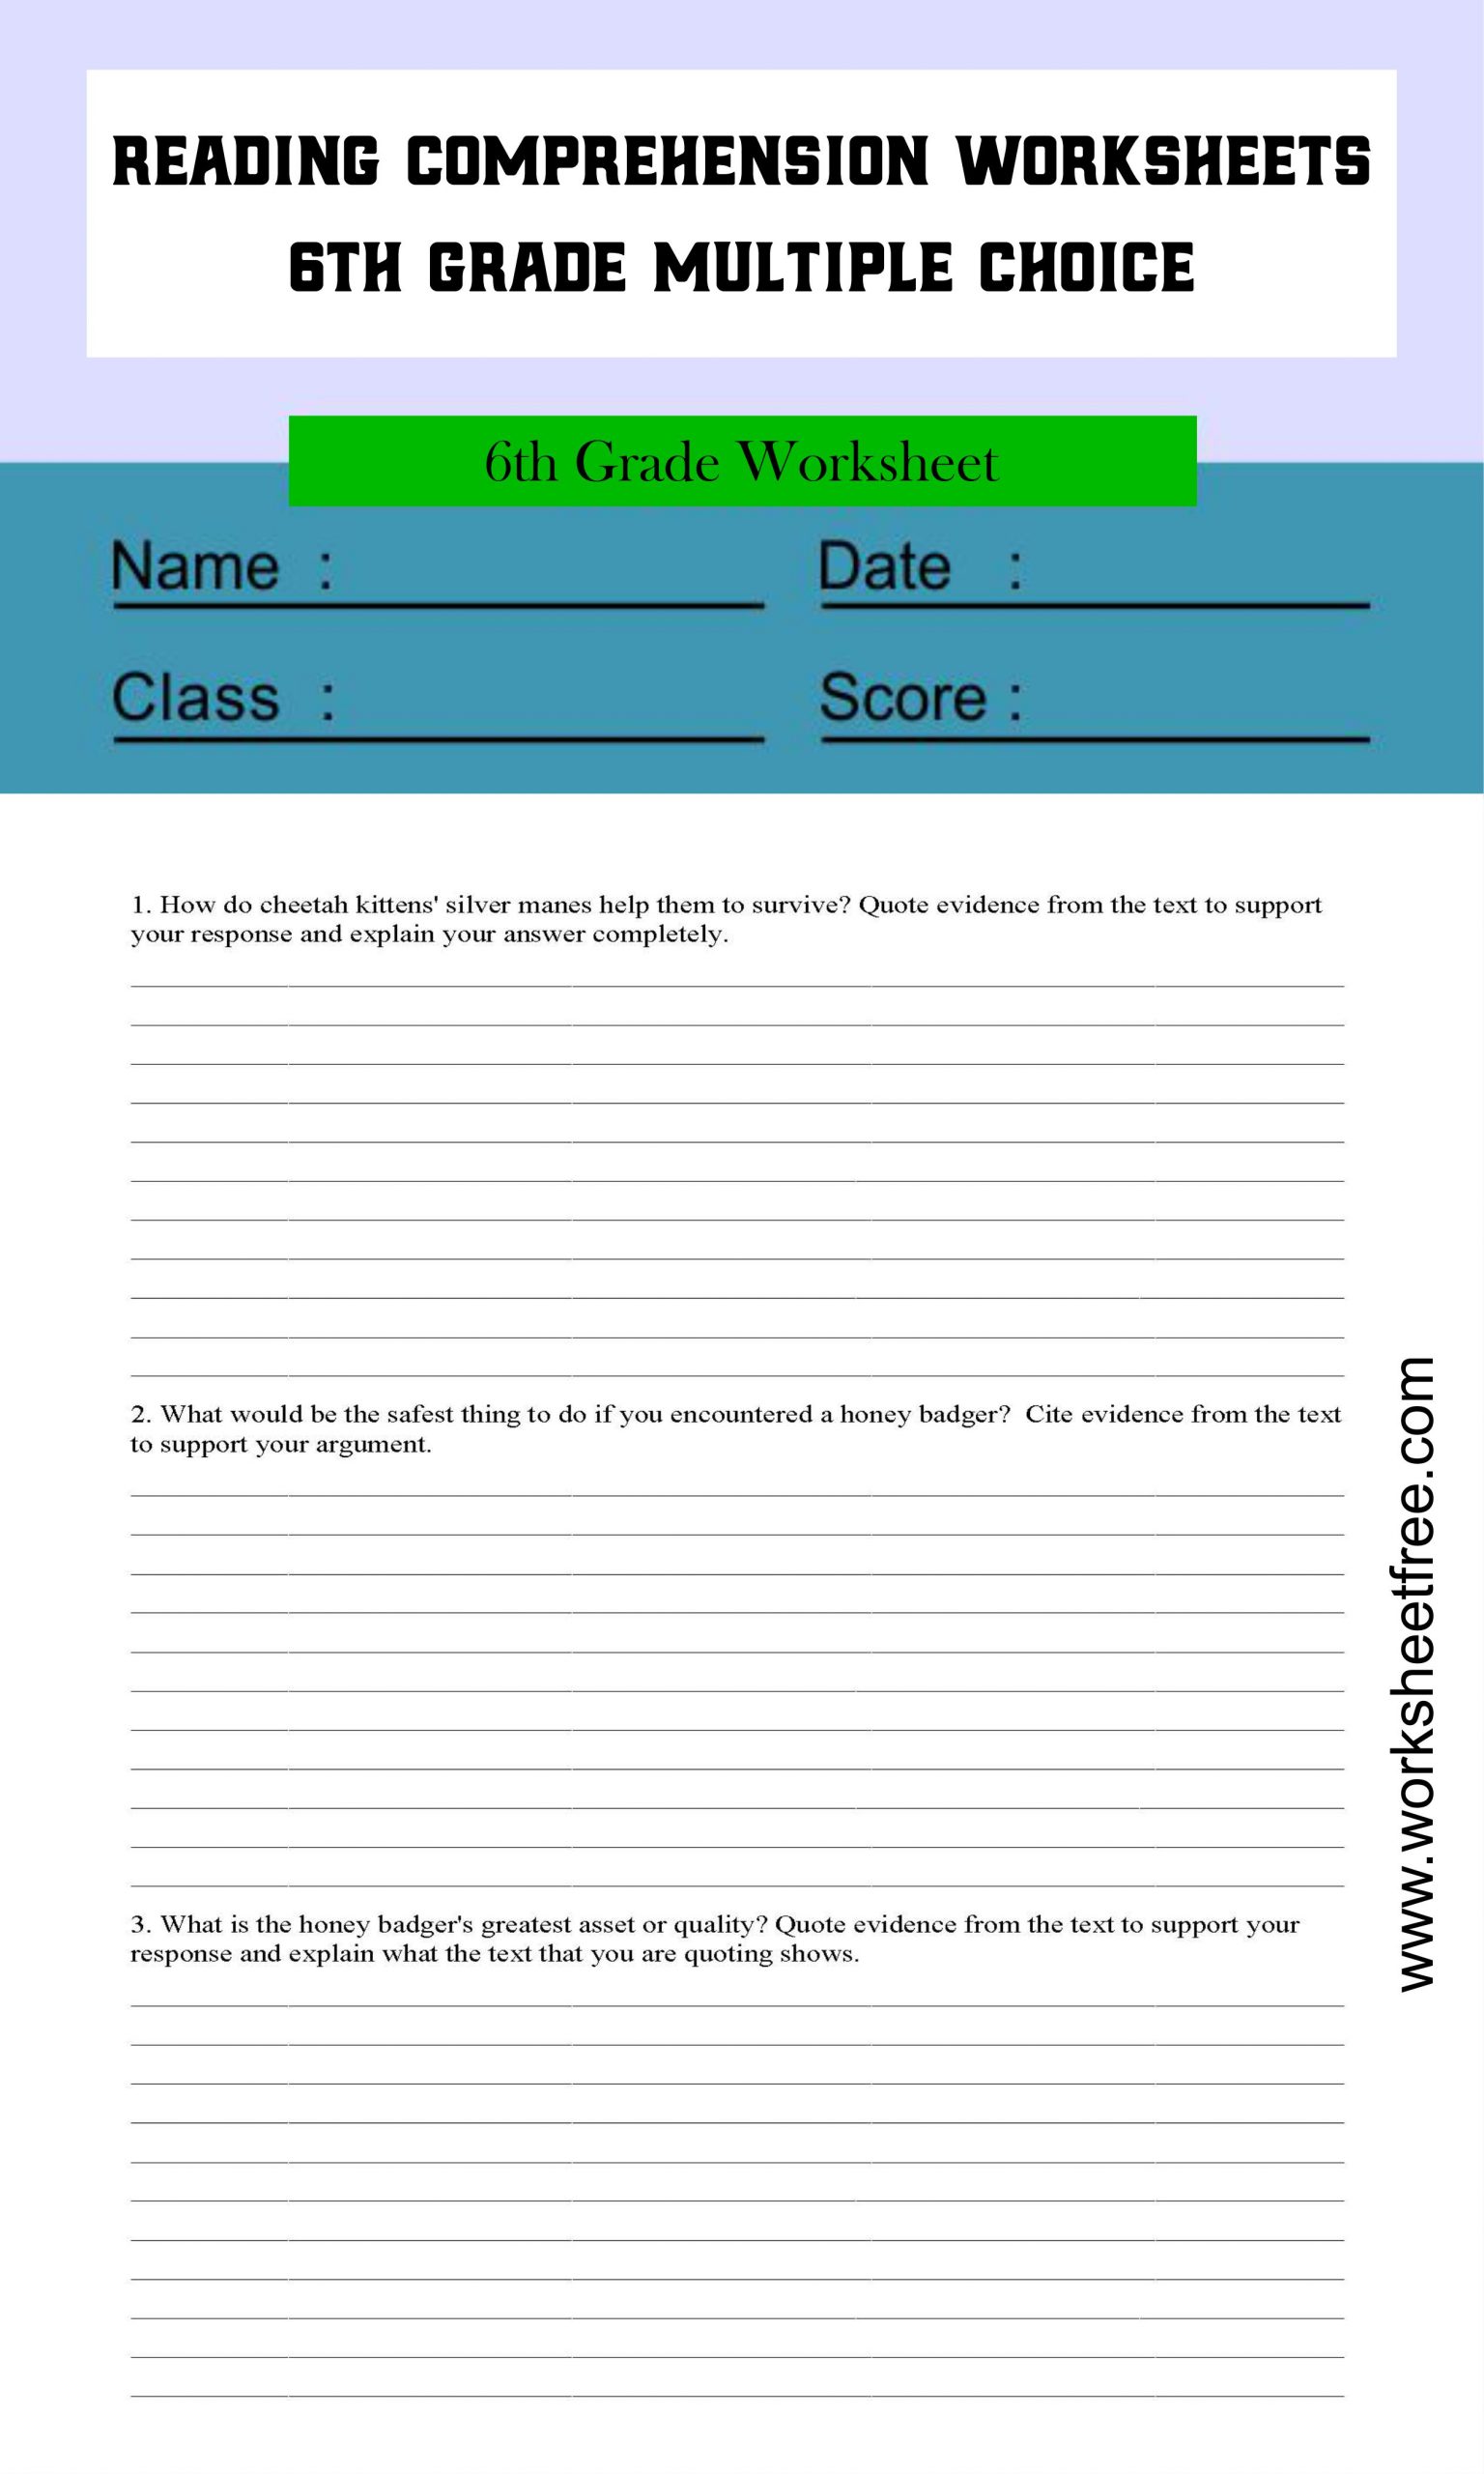 6th-grade-reading-comprehension-worksheets-pdf-db-excelcom-6th-grade-reading-comprehension